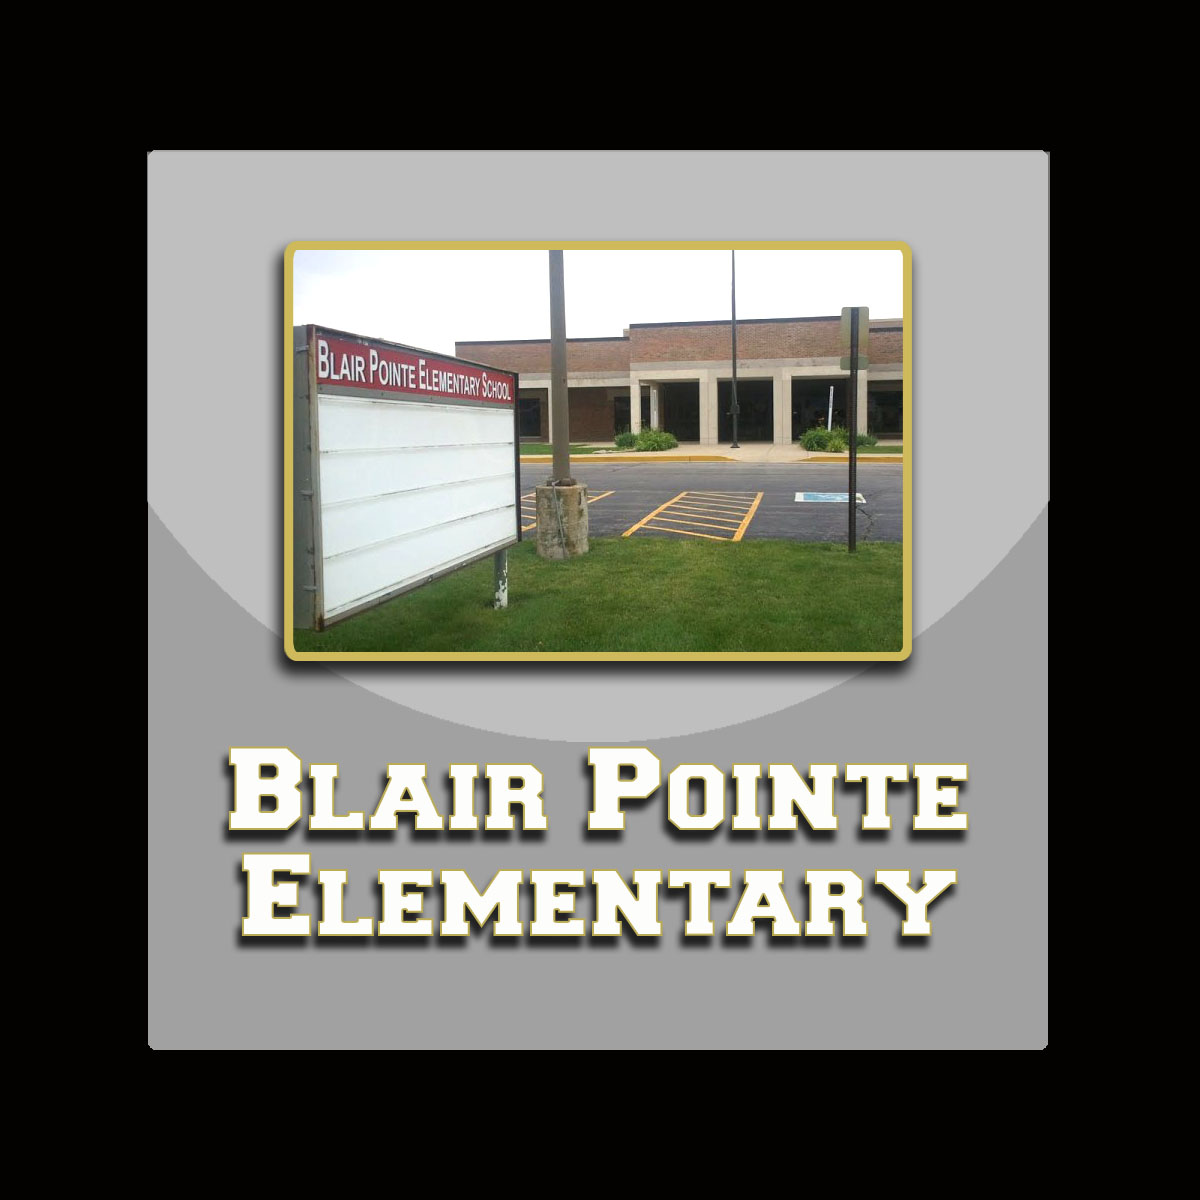 Blair Pointe Elementary